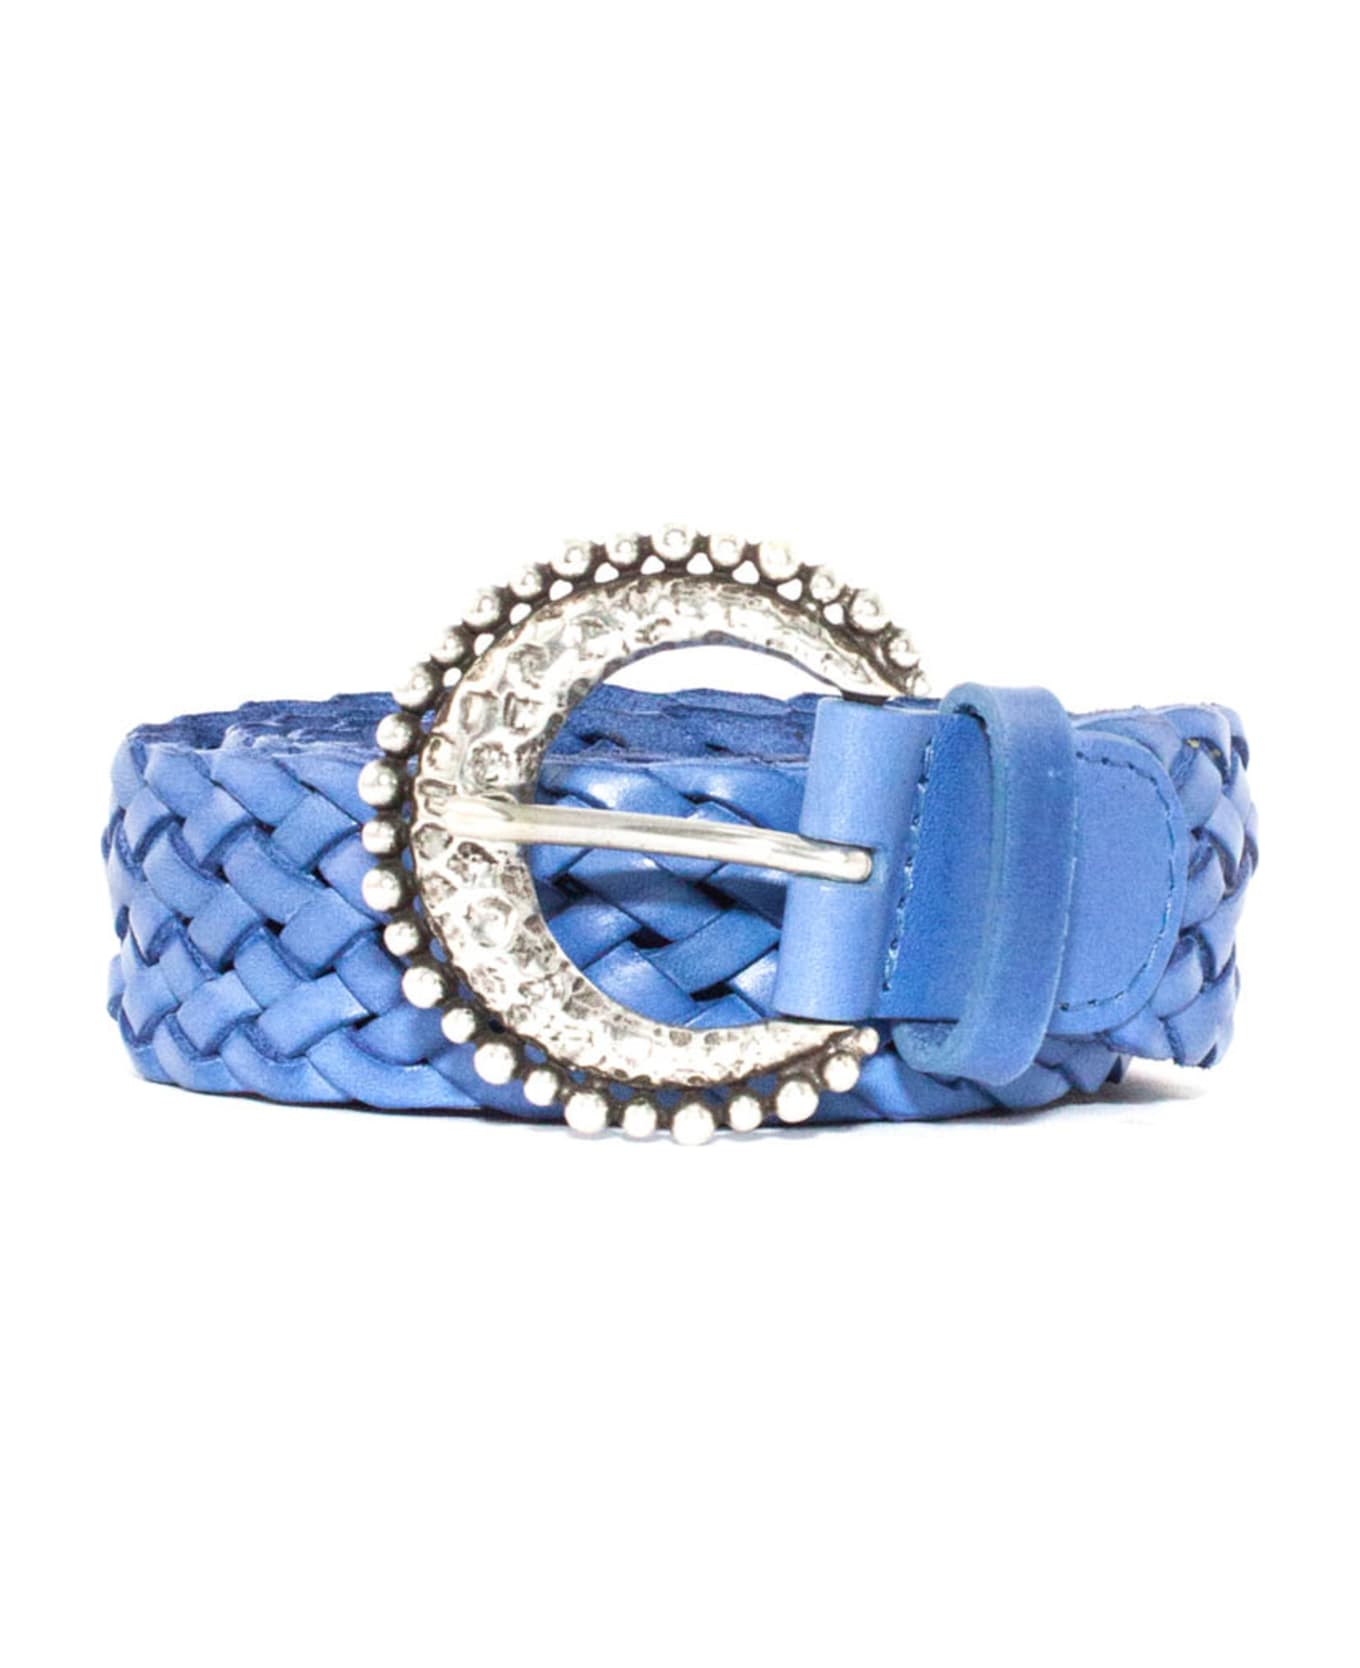 Orciani Braided Leather Belt - Blu